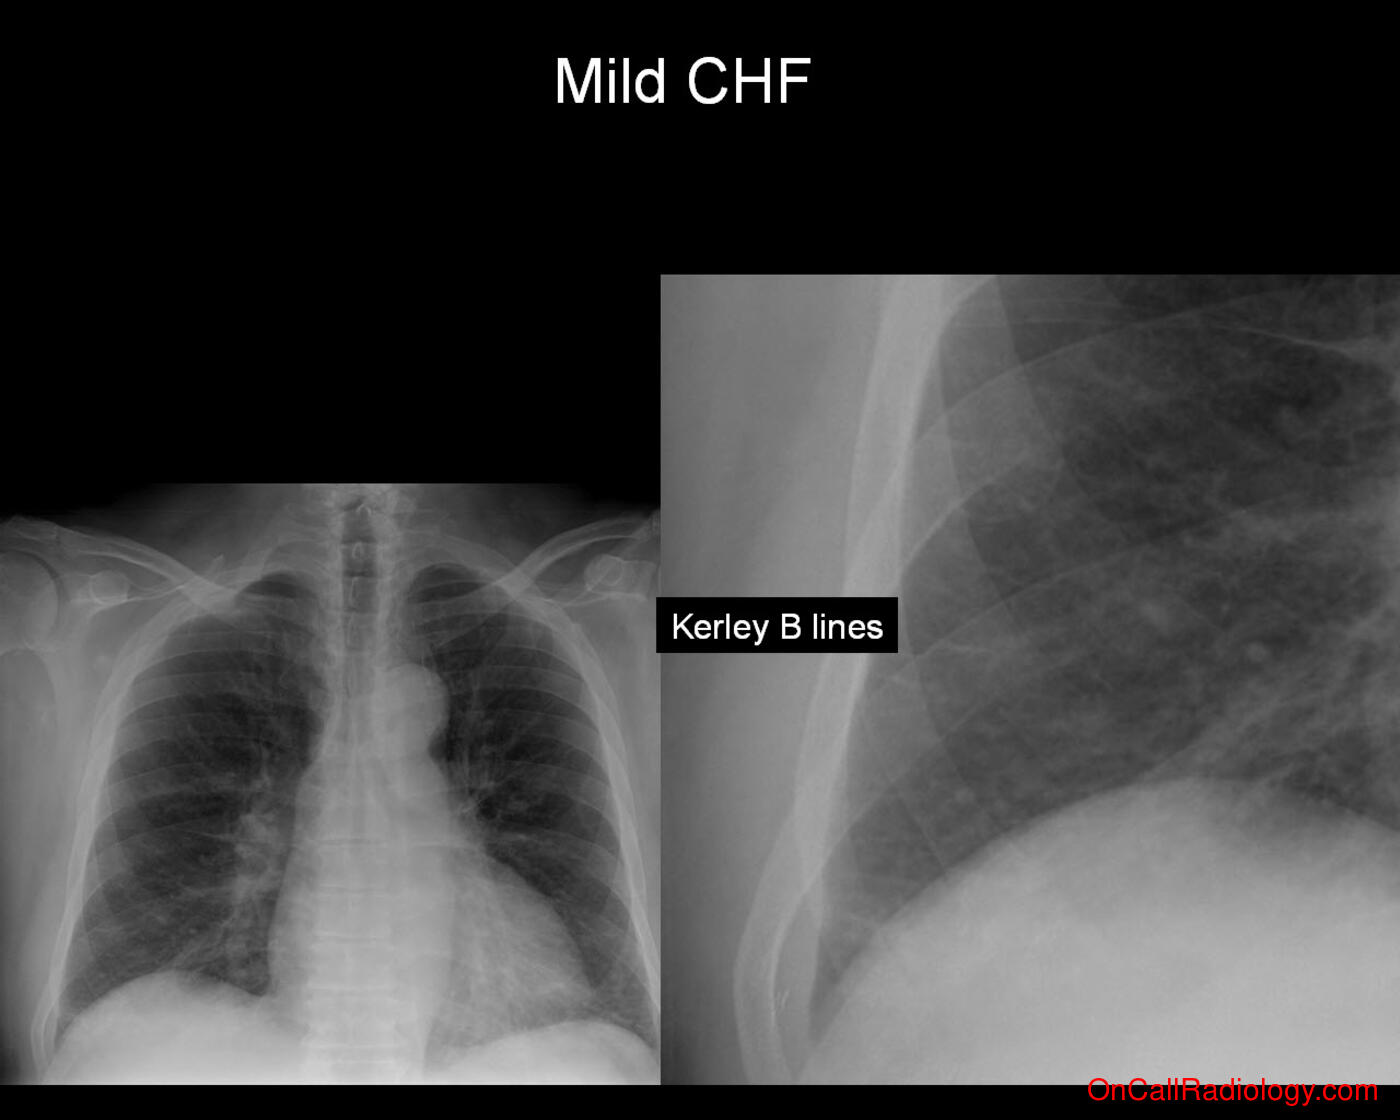 CHF (Mild CHF - Plain film, Radiograph)